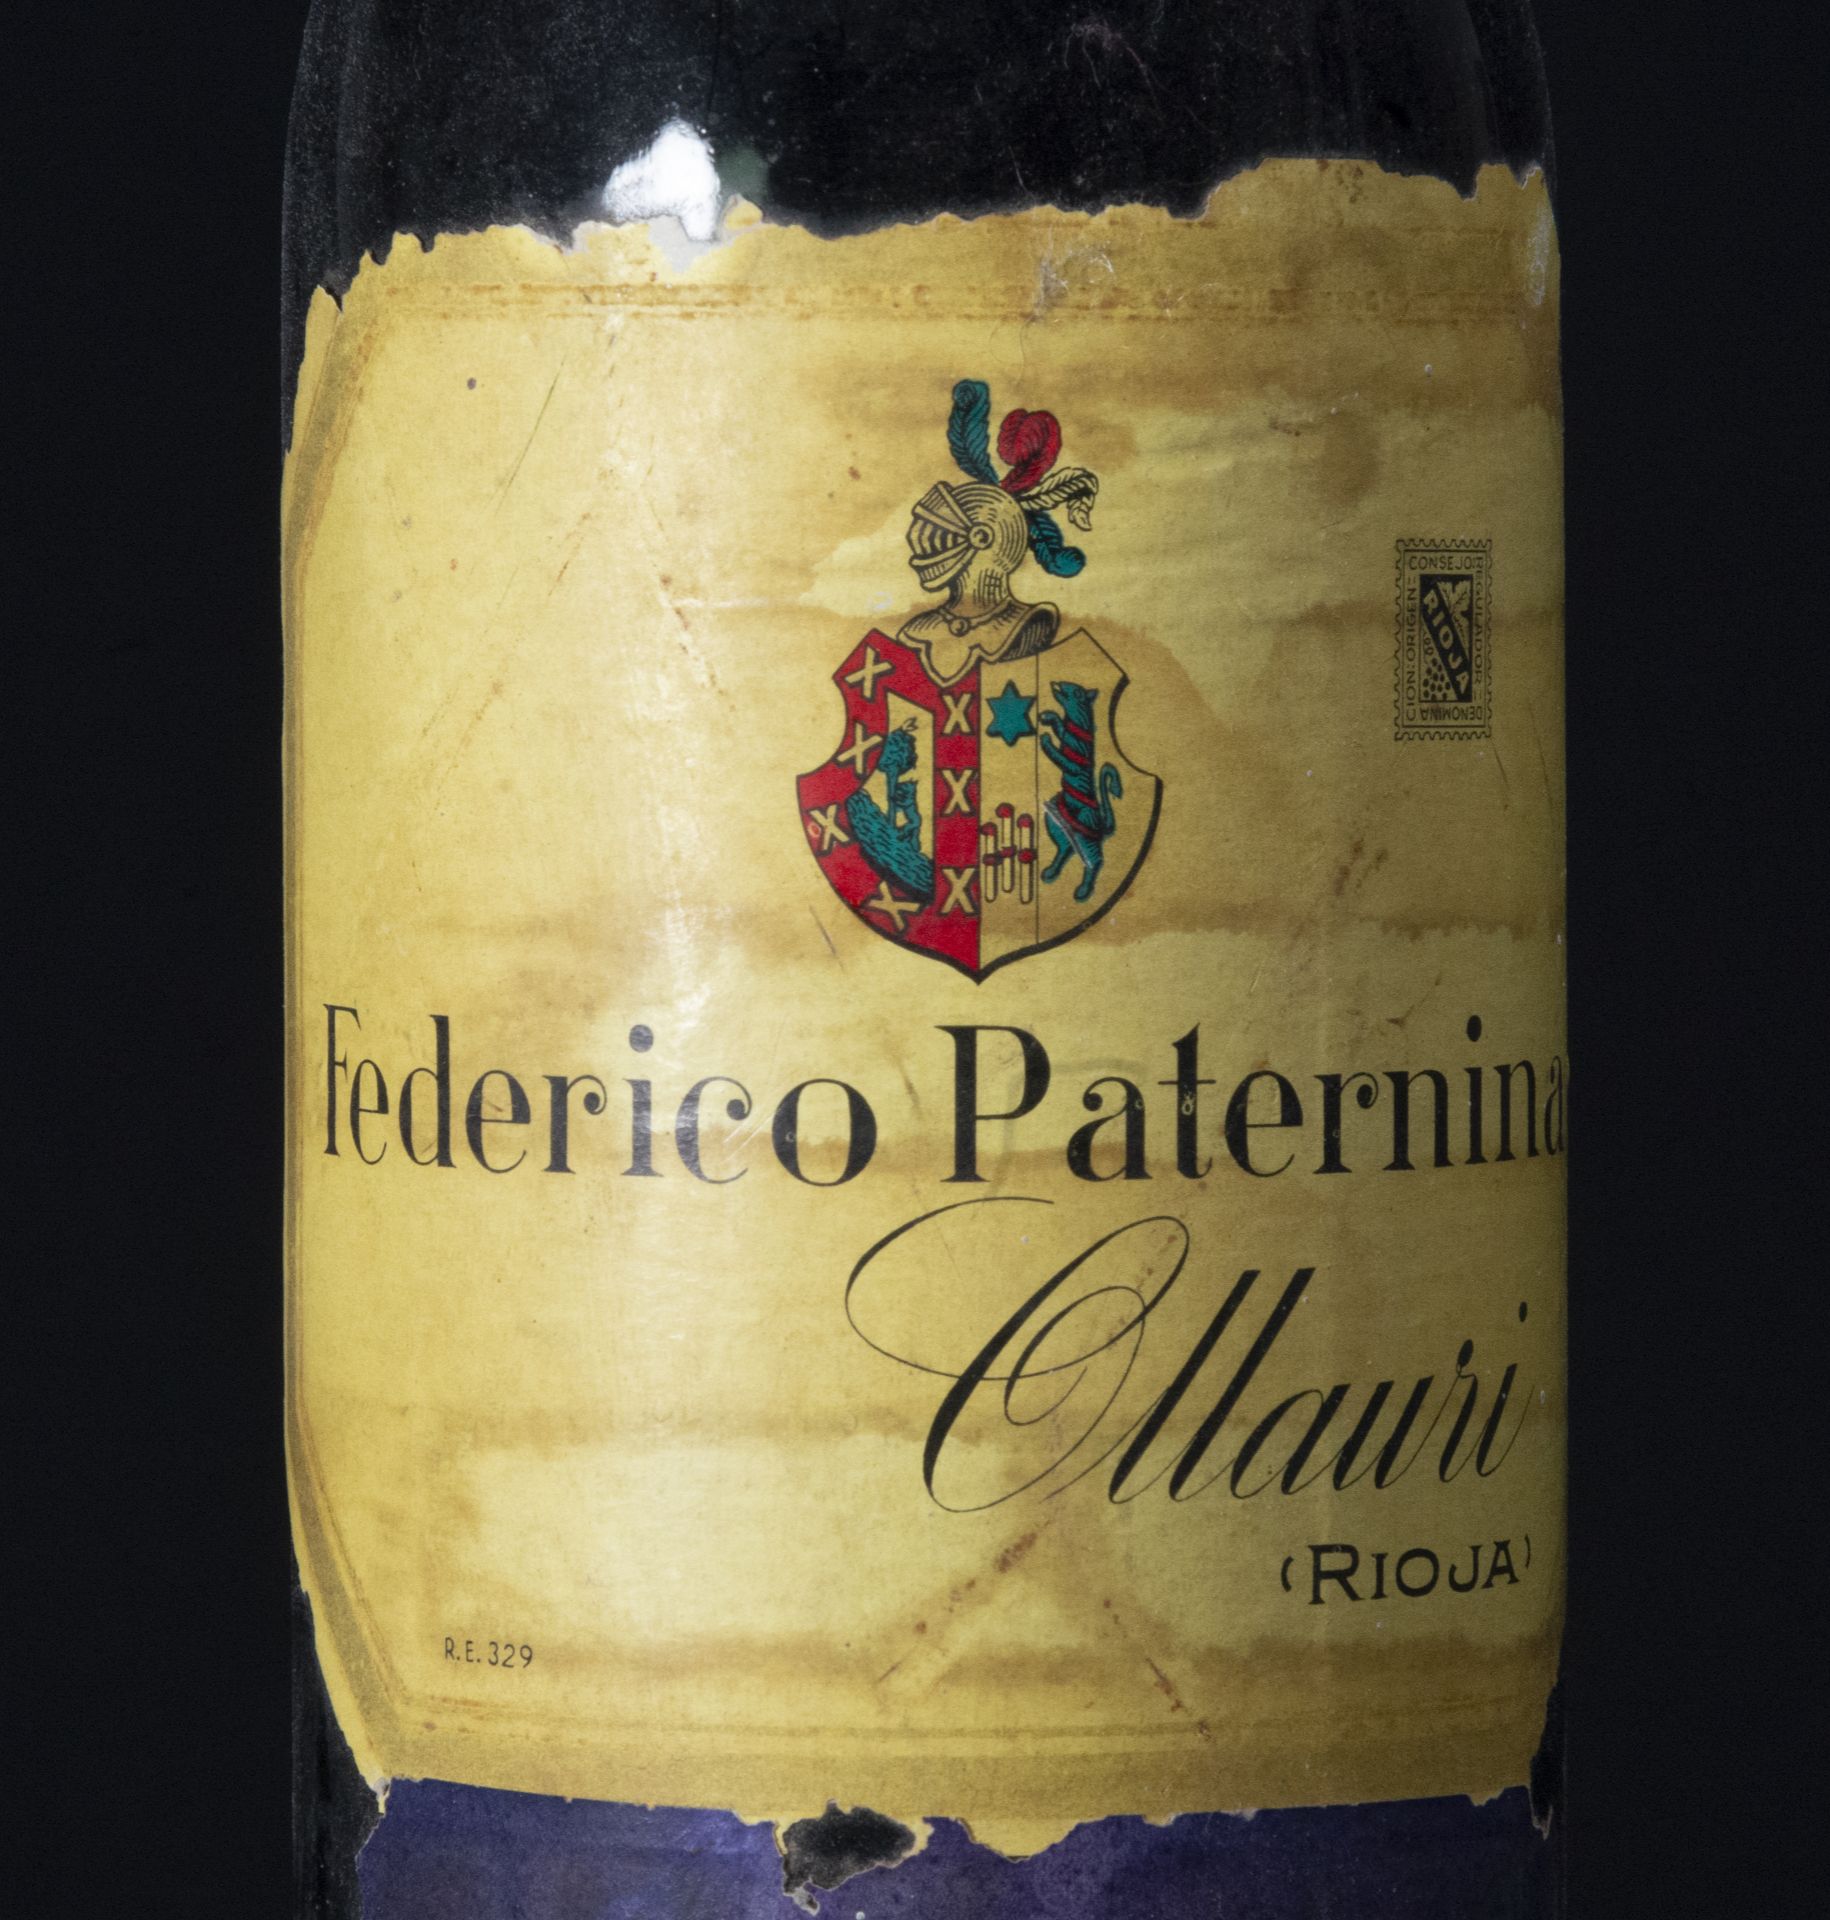 Bottle of Red Wine Federico Paternina, Gran Reserva - Image 2 of 2